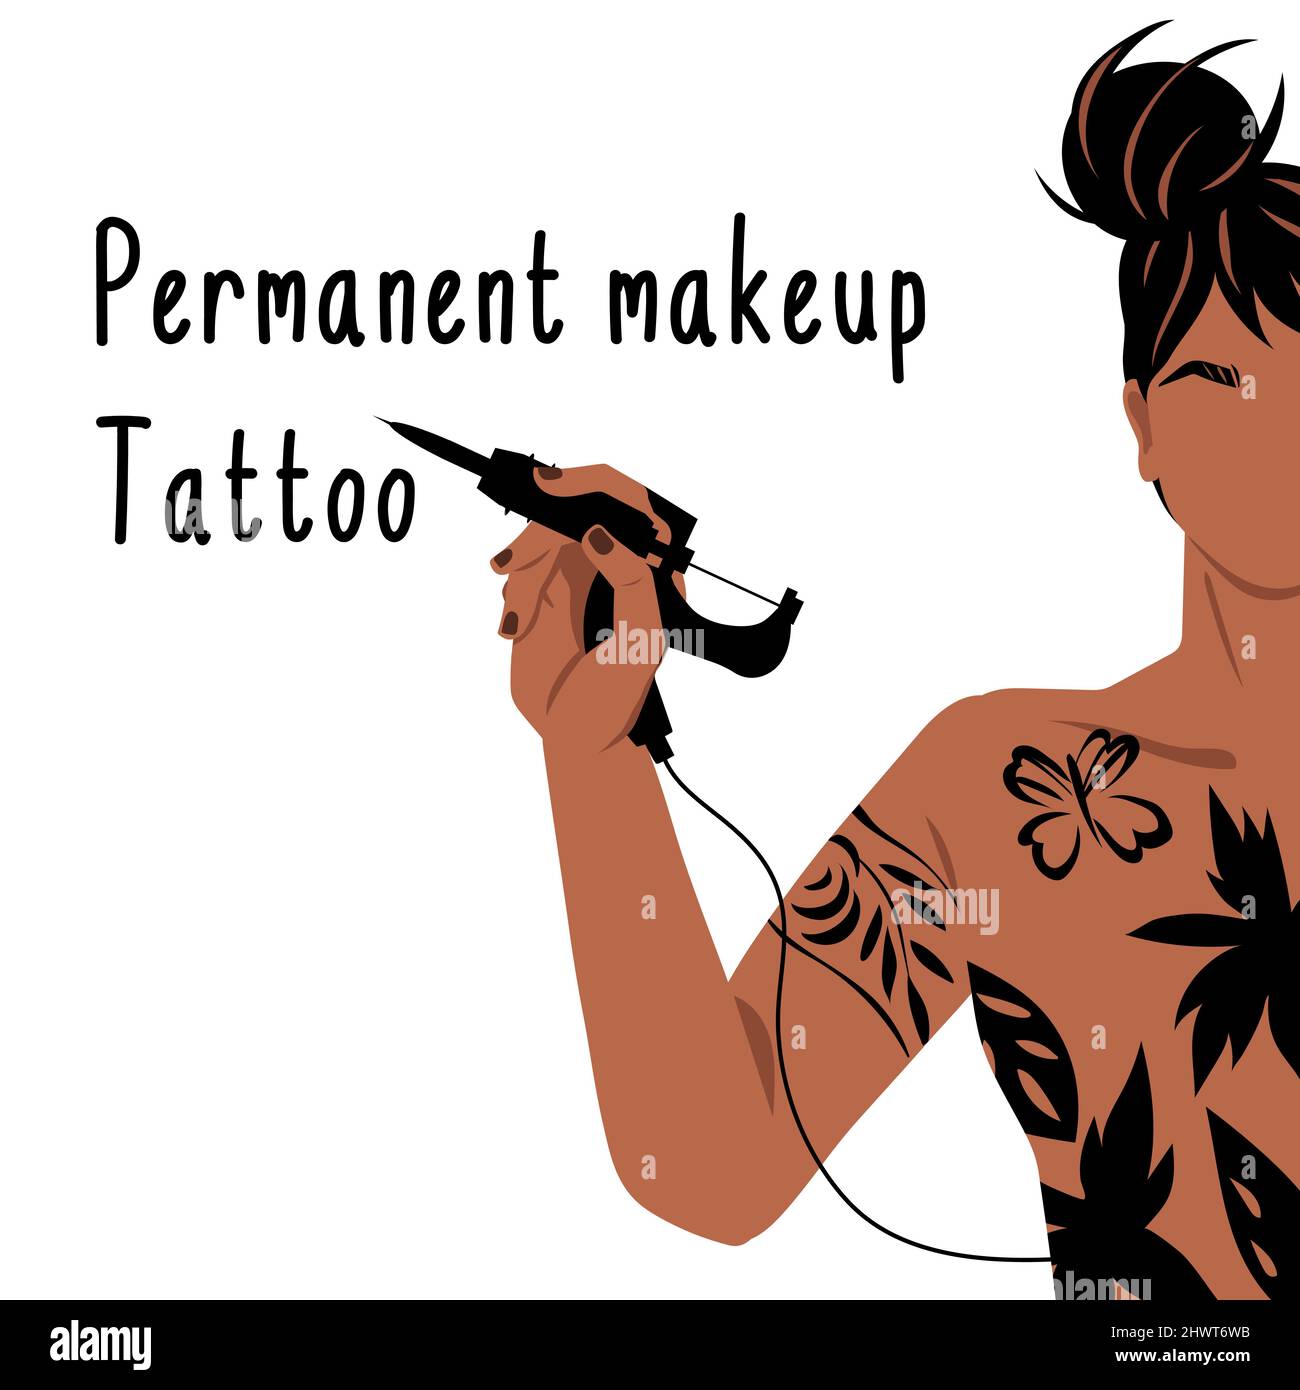 makeup related tattoos - Google Search | Ink tattoo, Makeup artist tattoo,  Girly tattoos